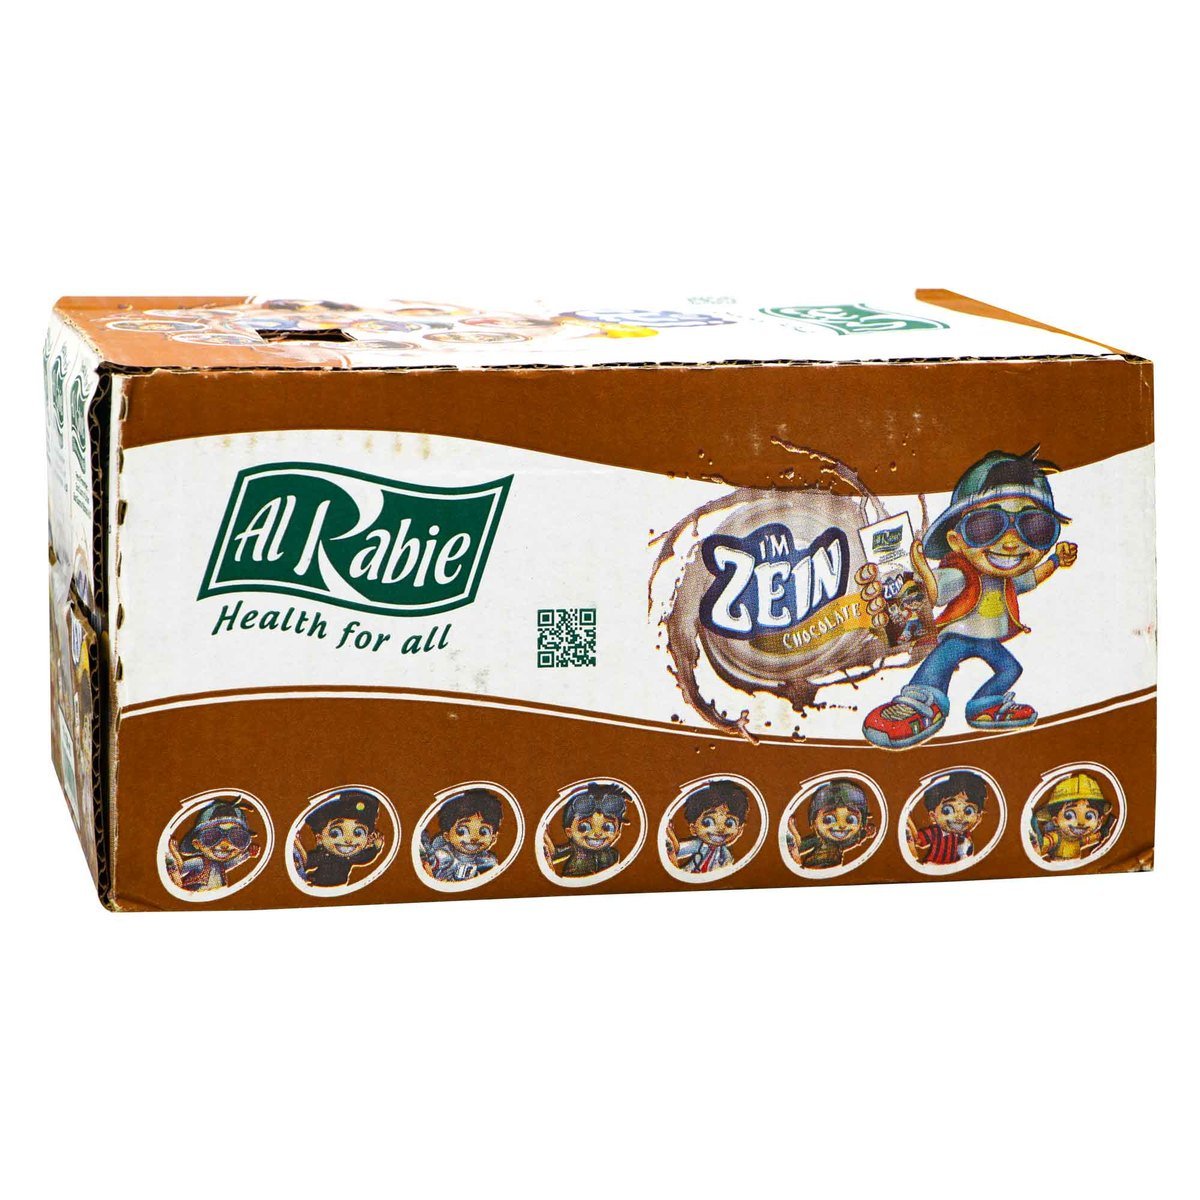 Al Rabie I'm Zein Chocolate Flavoured Milk 18 x 200ml